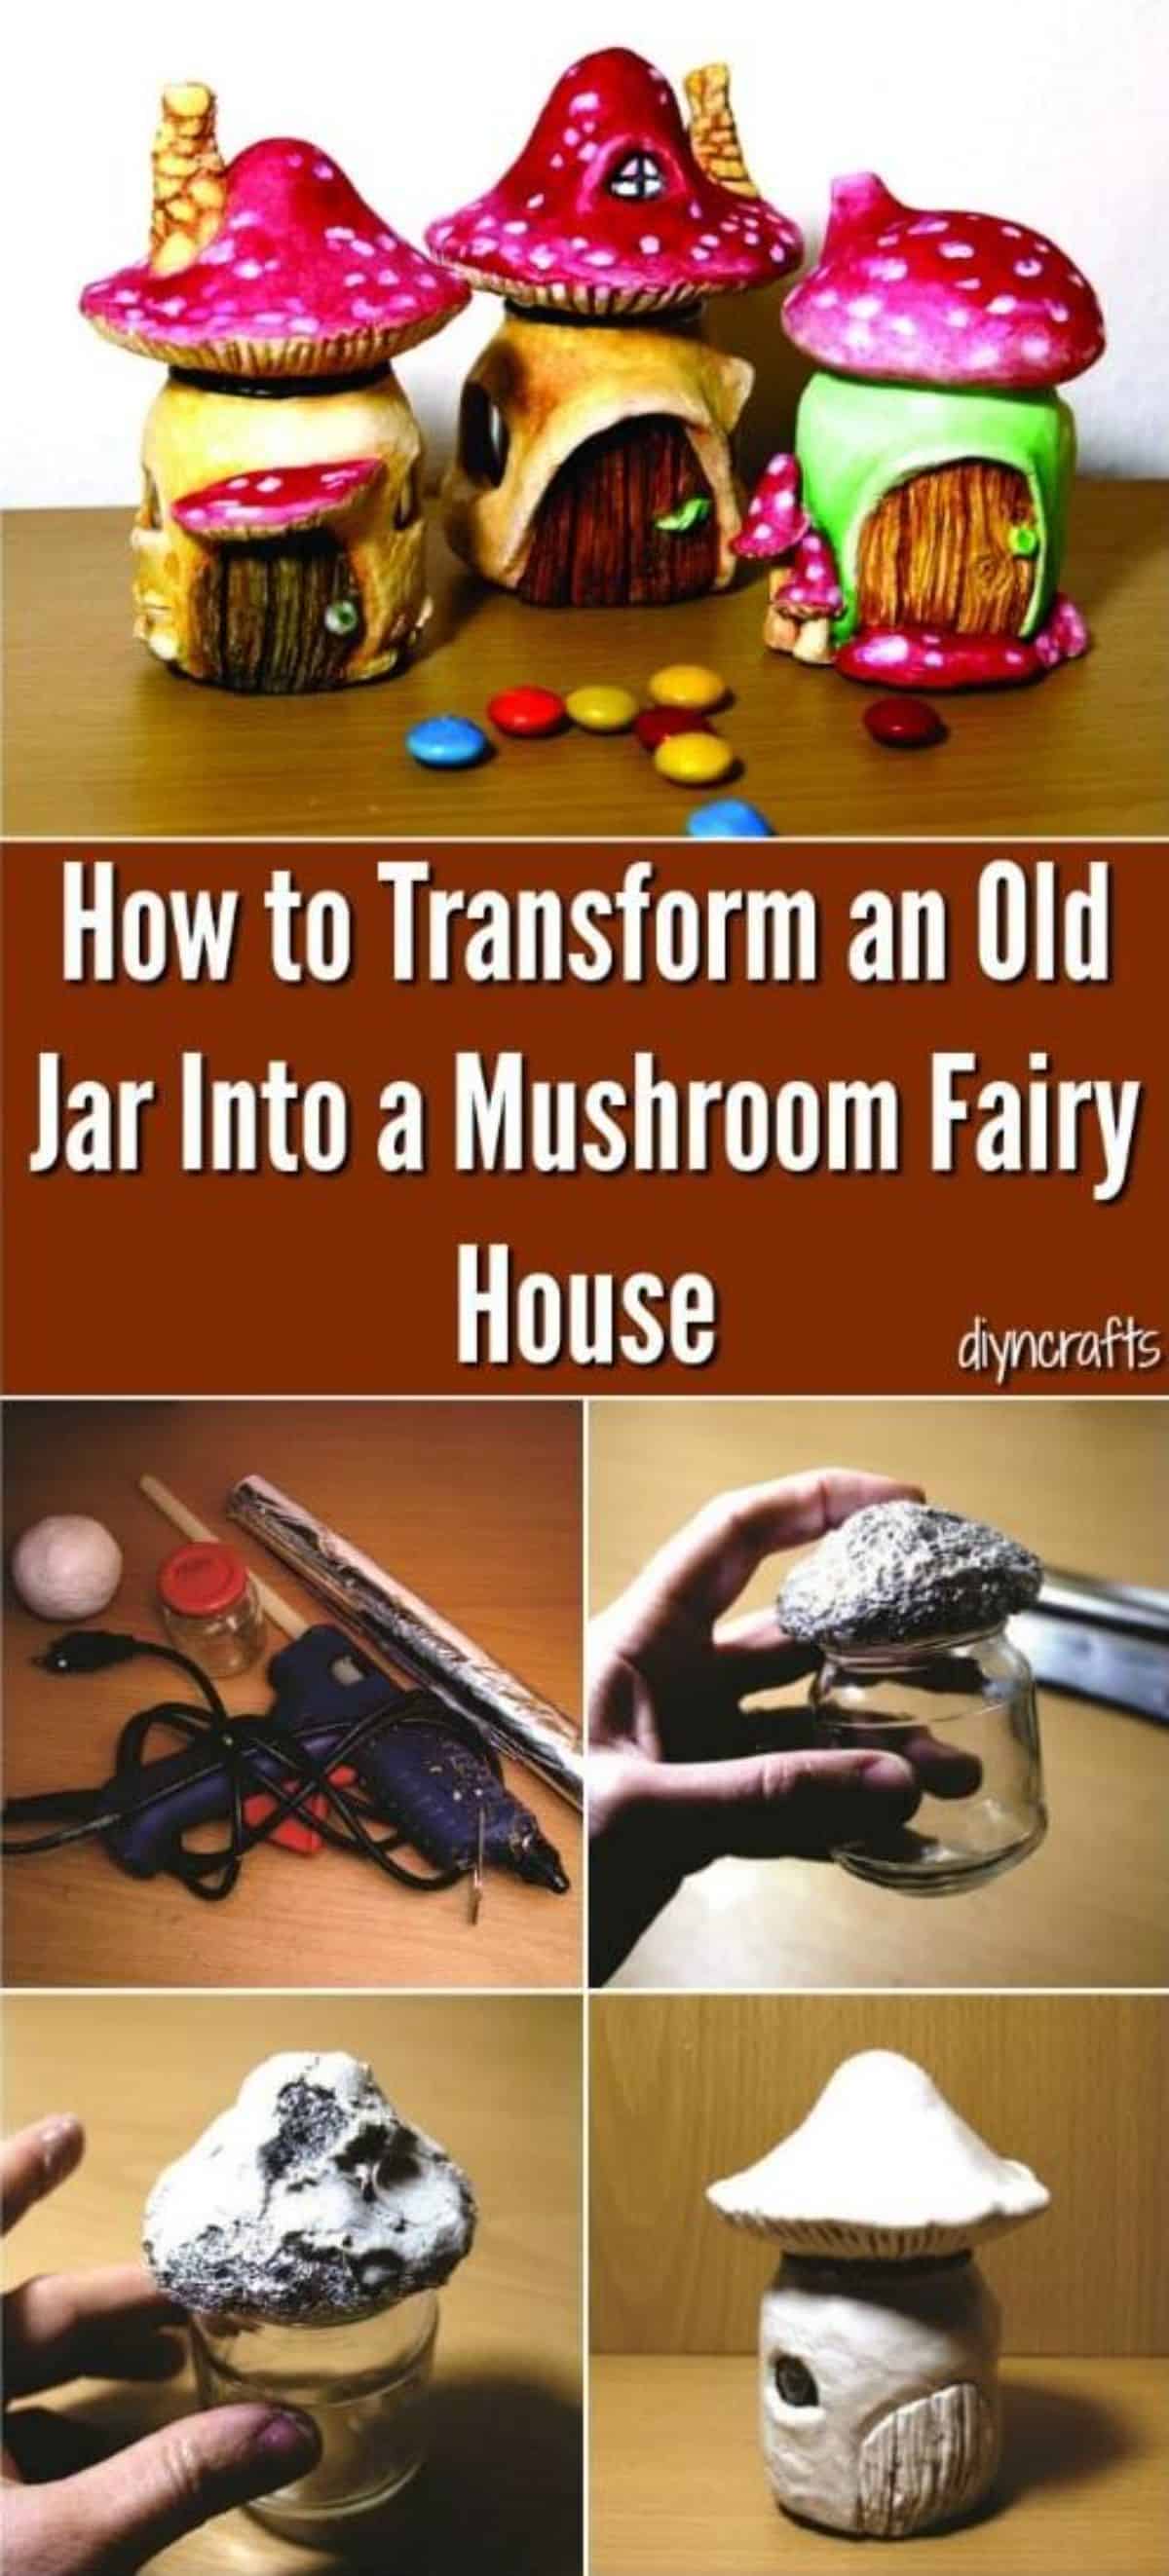 How to Transform an Old Jar Into a Mushroom Fairy House pinterest image.